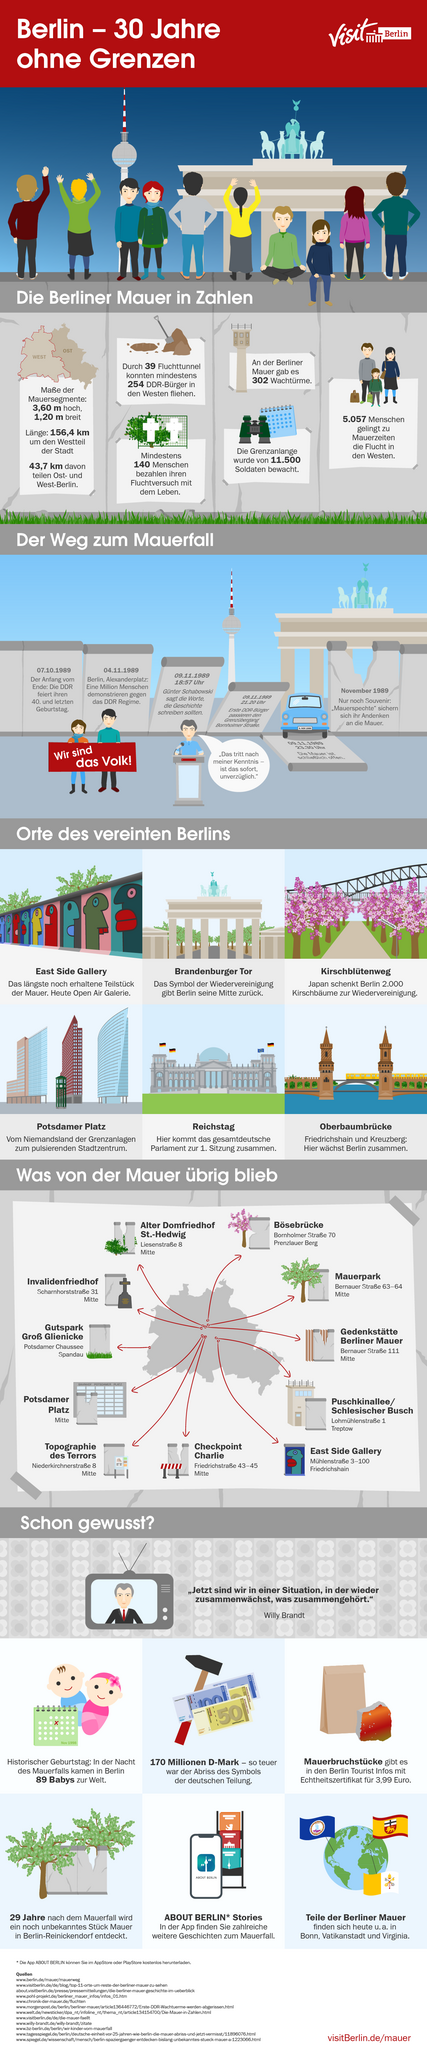 Infografik Mauer & Mauerfall in Berlin